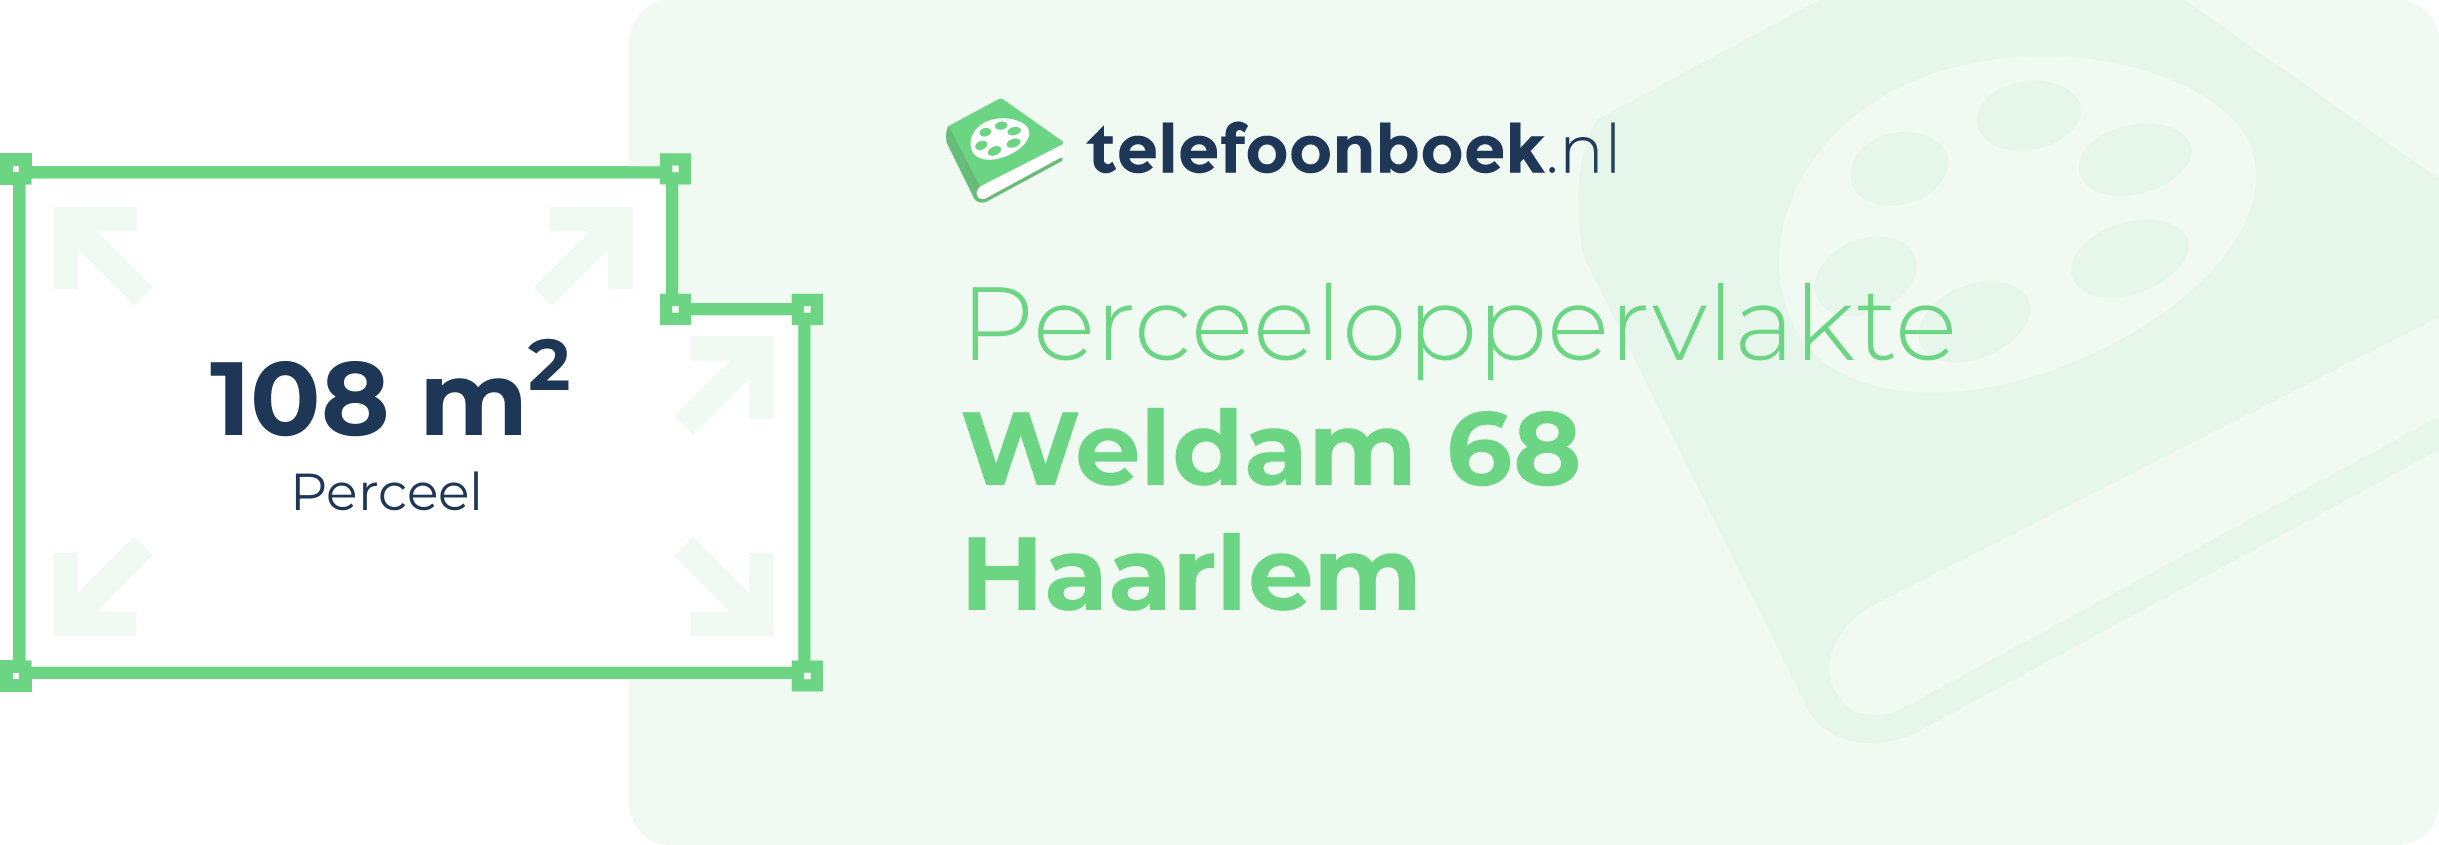 Perceeloppervlakte Weldam 68 Haarlem